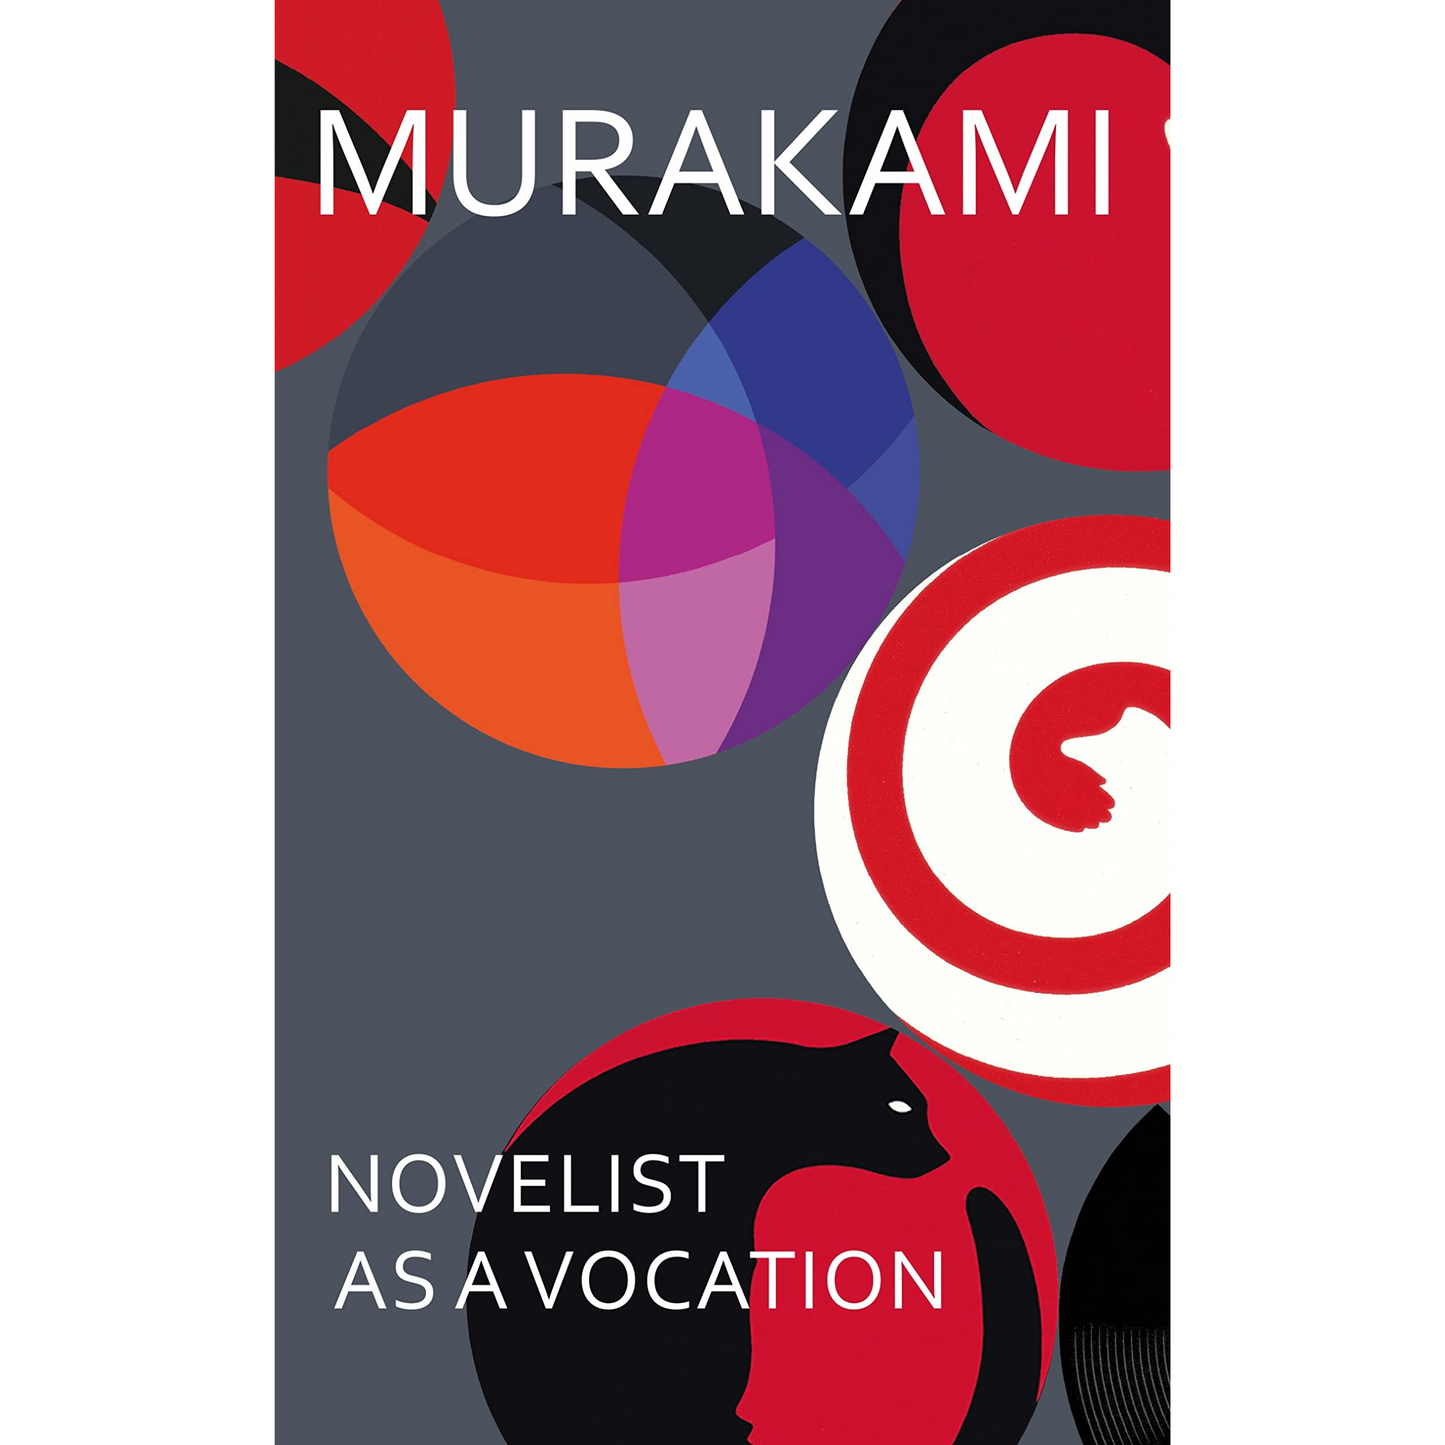 Haruki Murakami: Novelist as a Vocation